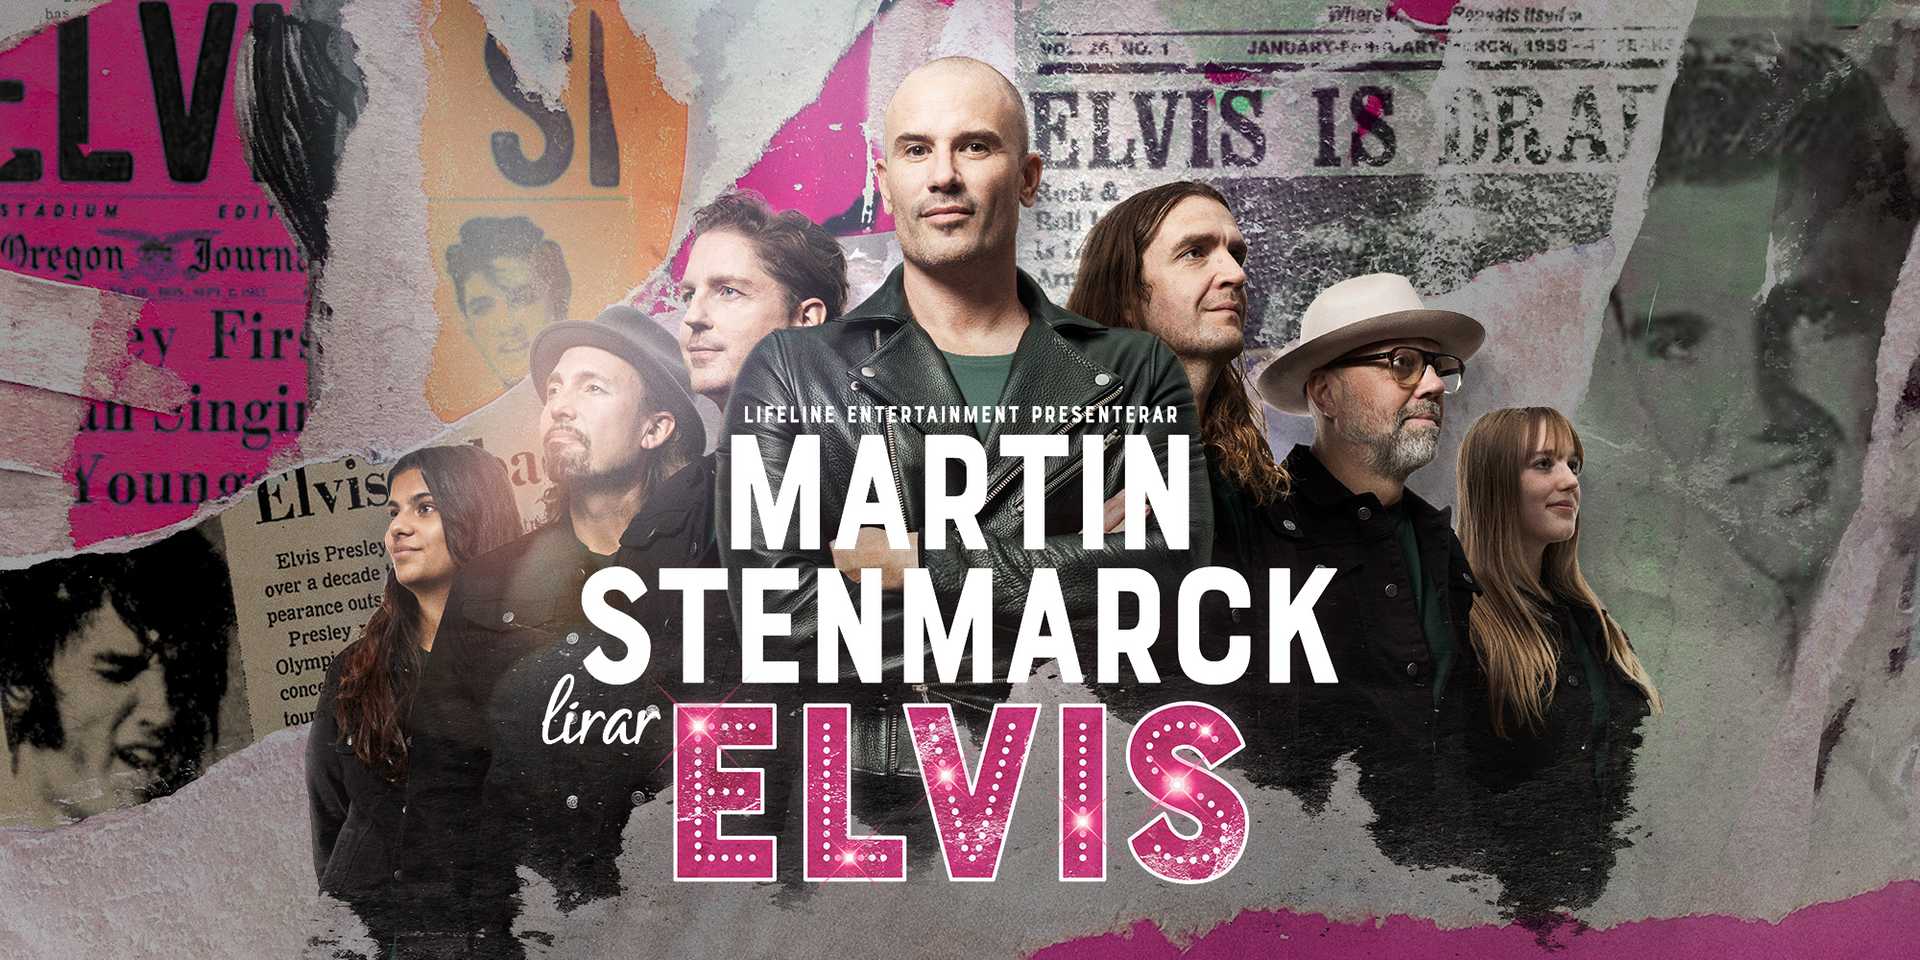 Martin Stenmarck lirar Elvis